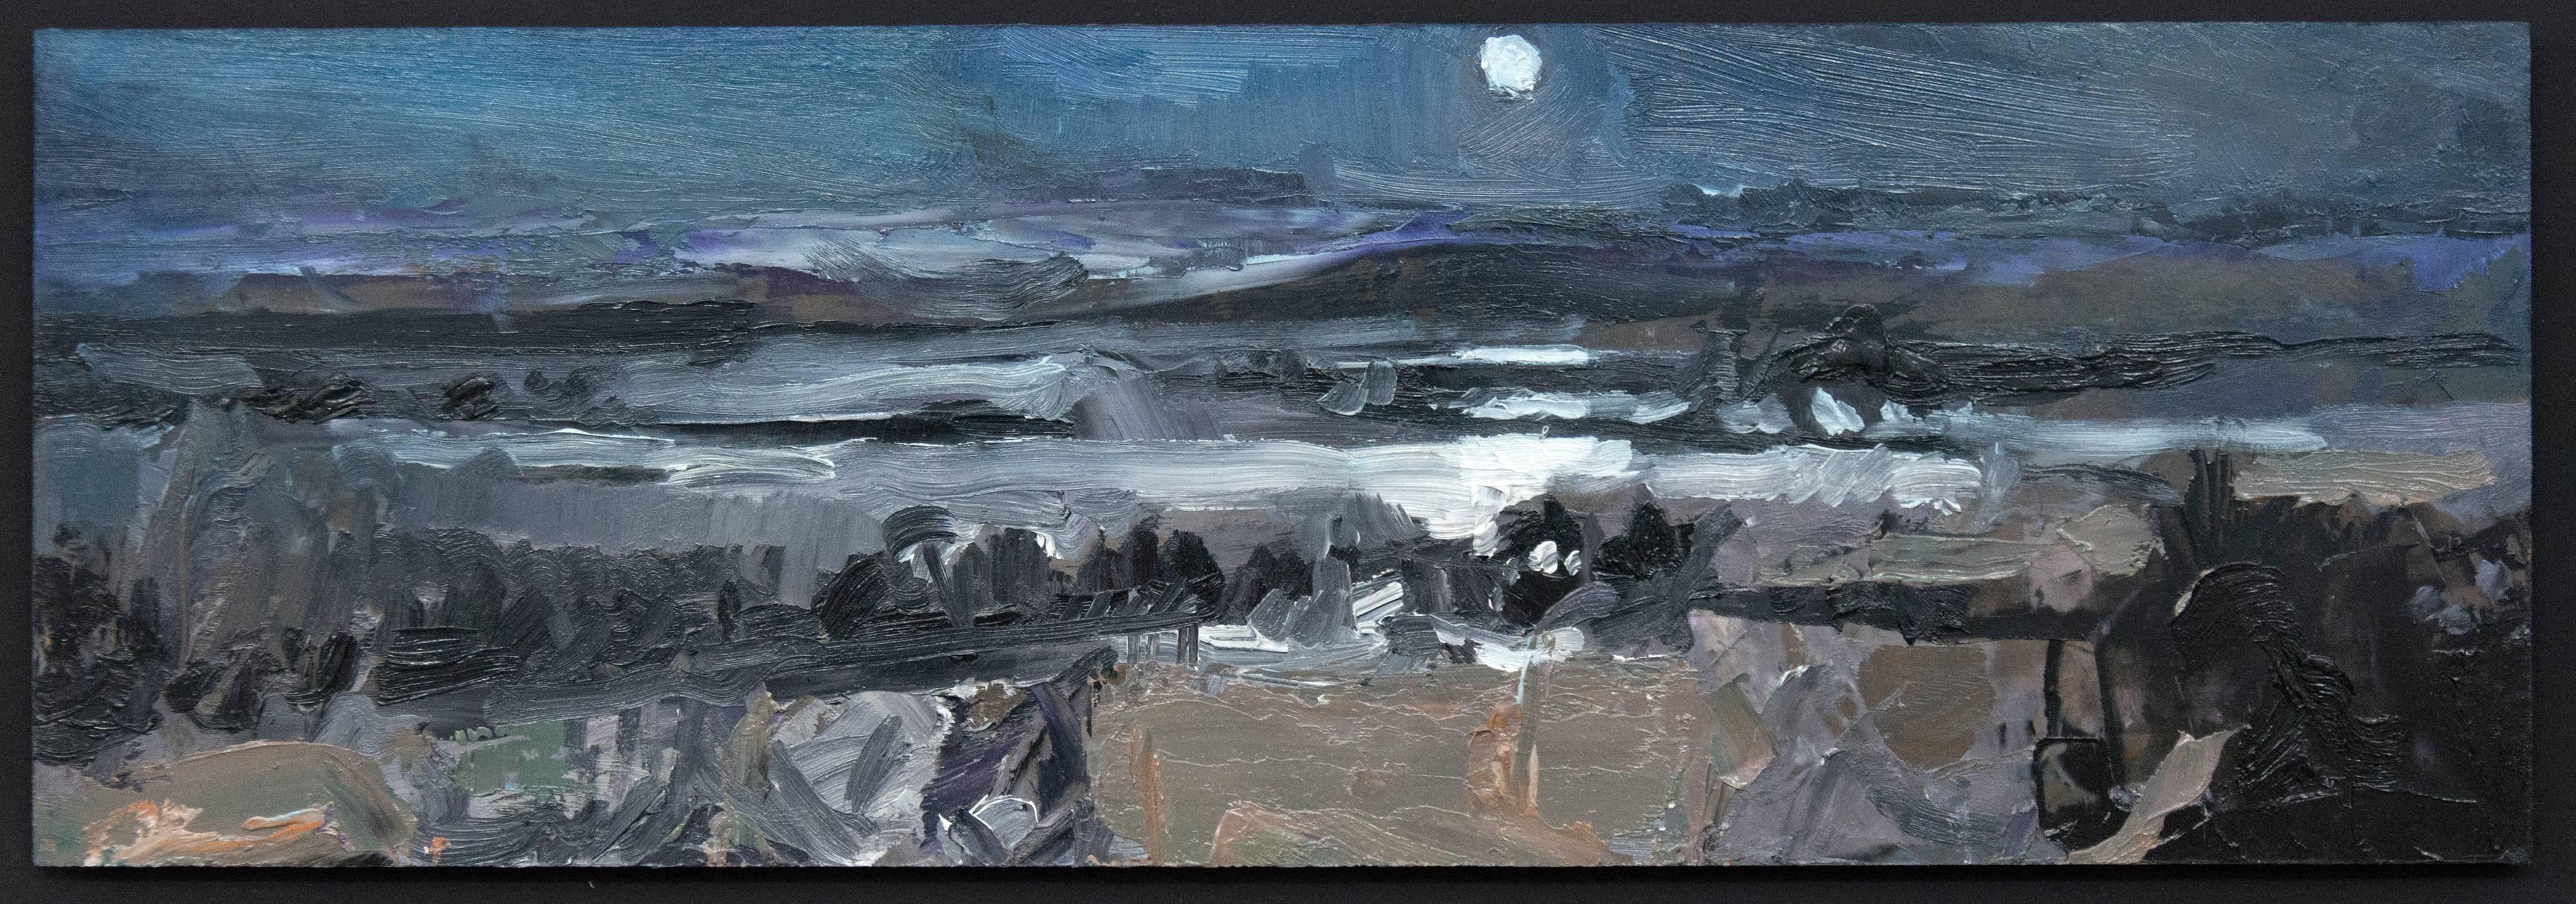 Simon Andrew Landscape Painting - Nocturnal Winter Landscape - gestural, intimate impasto landscape